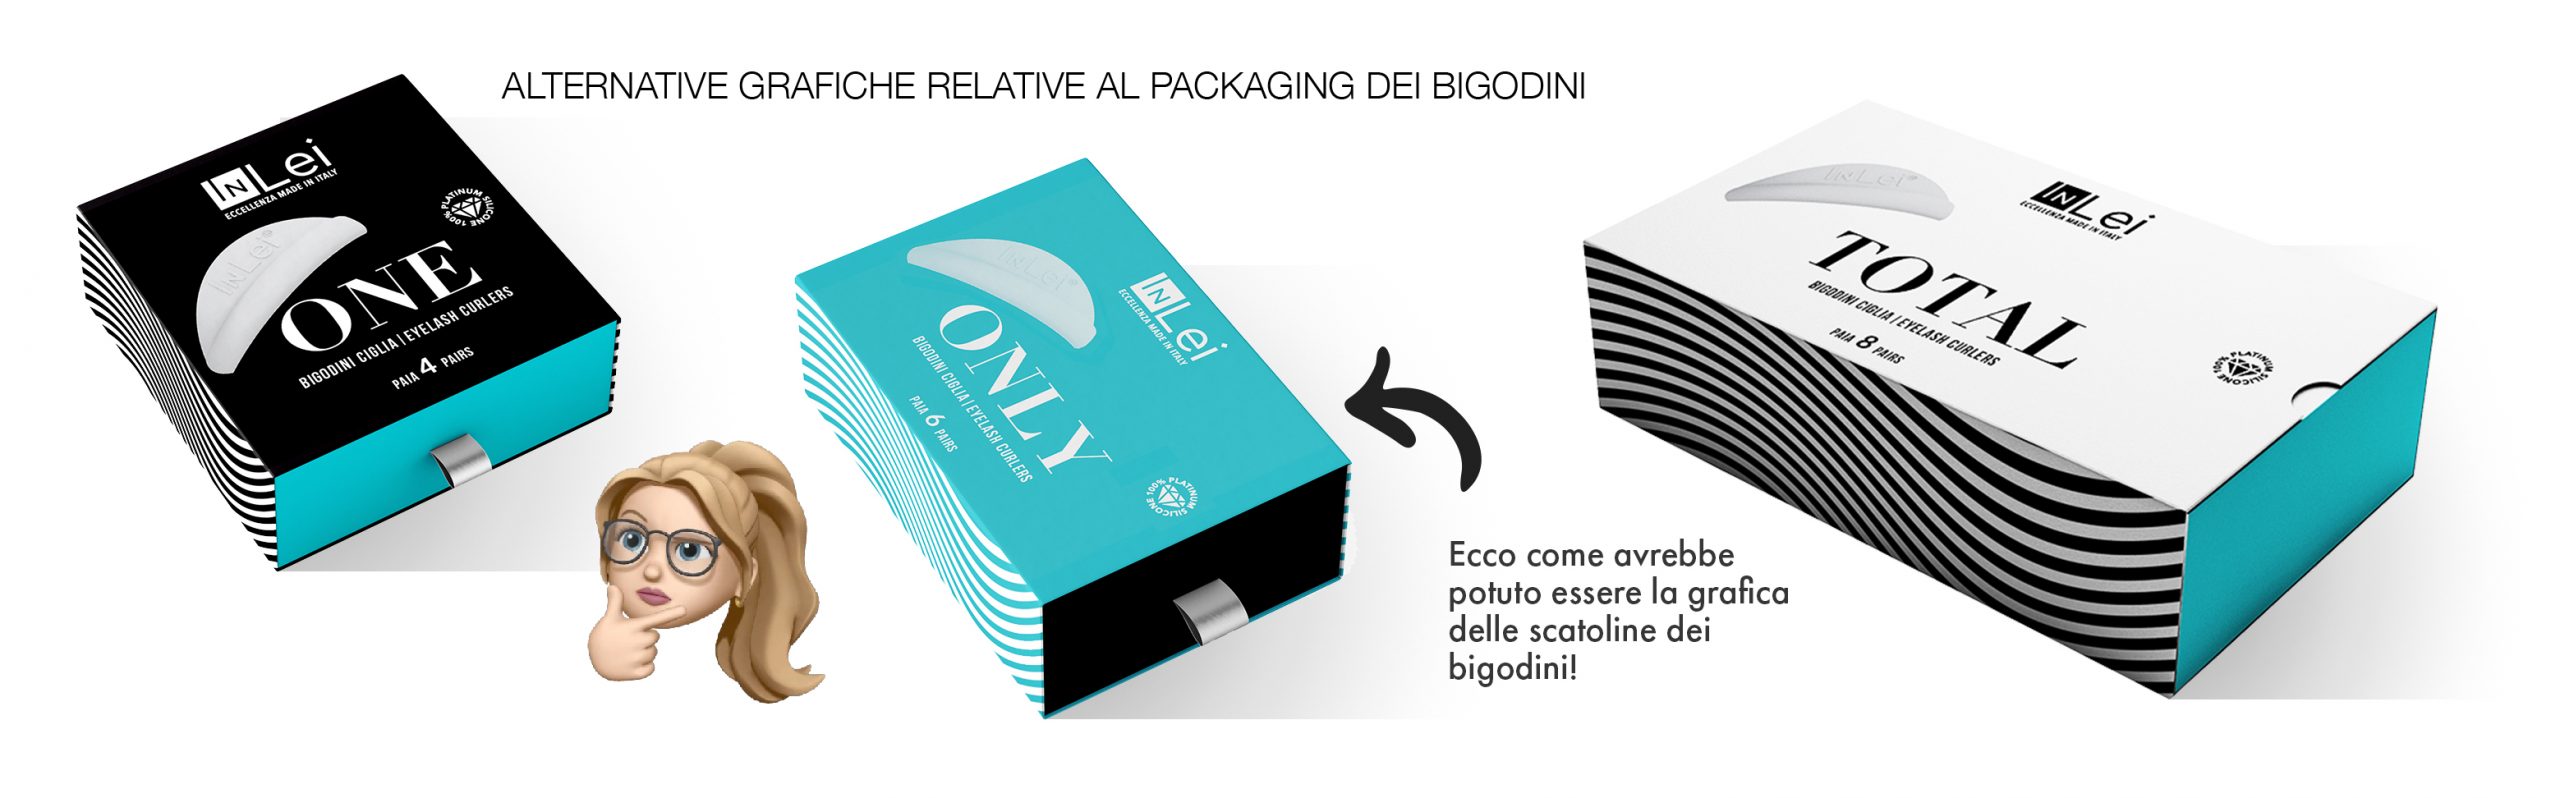 inlei_blog_packaging_bigodini2